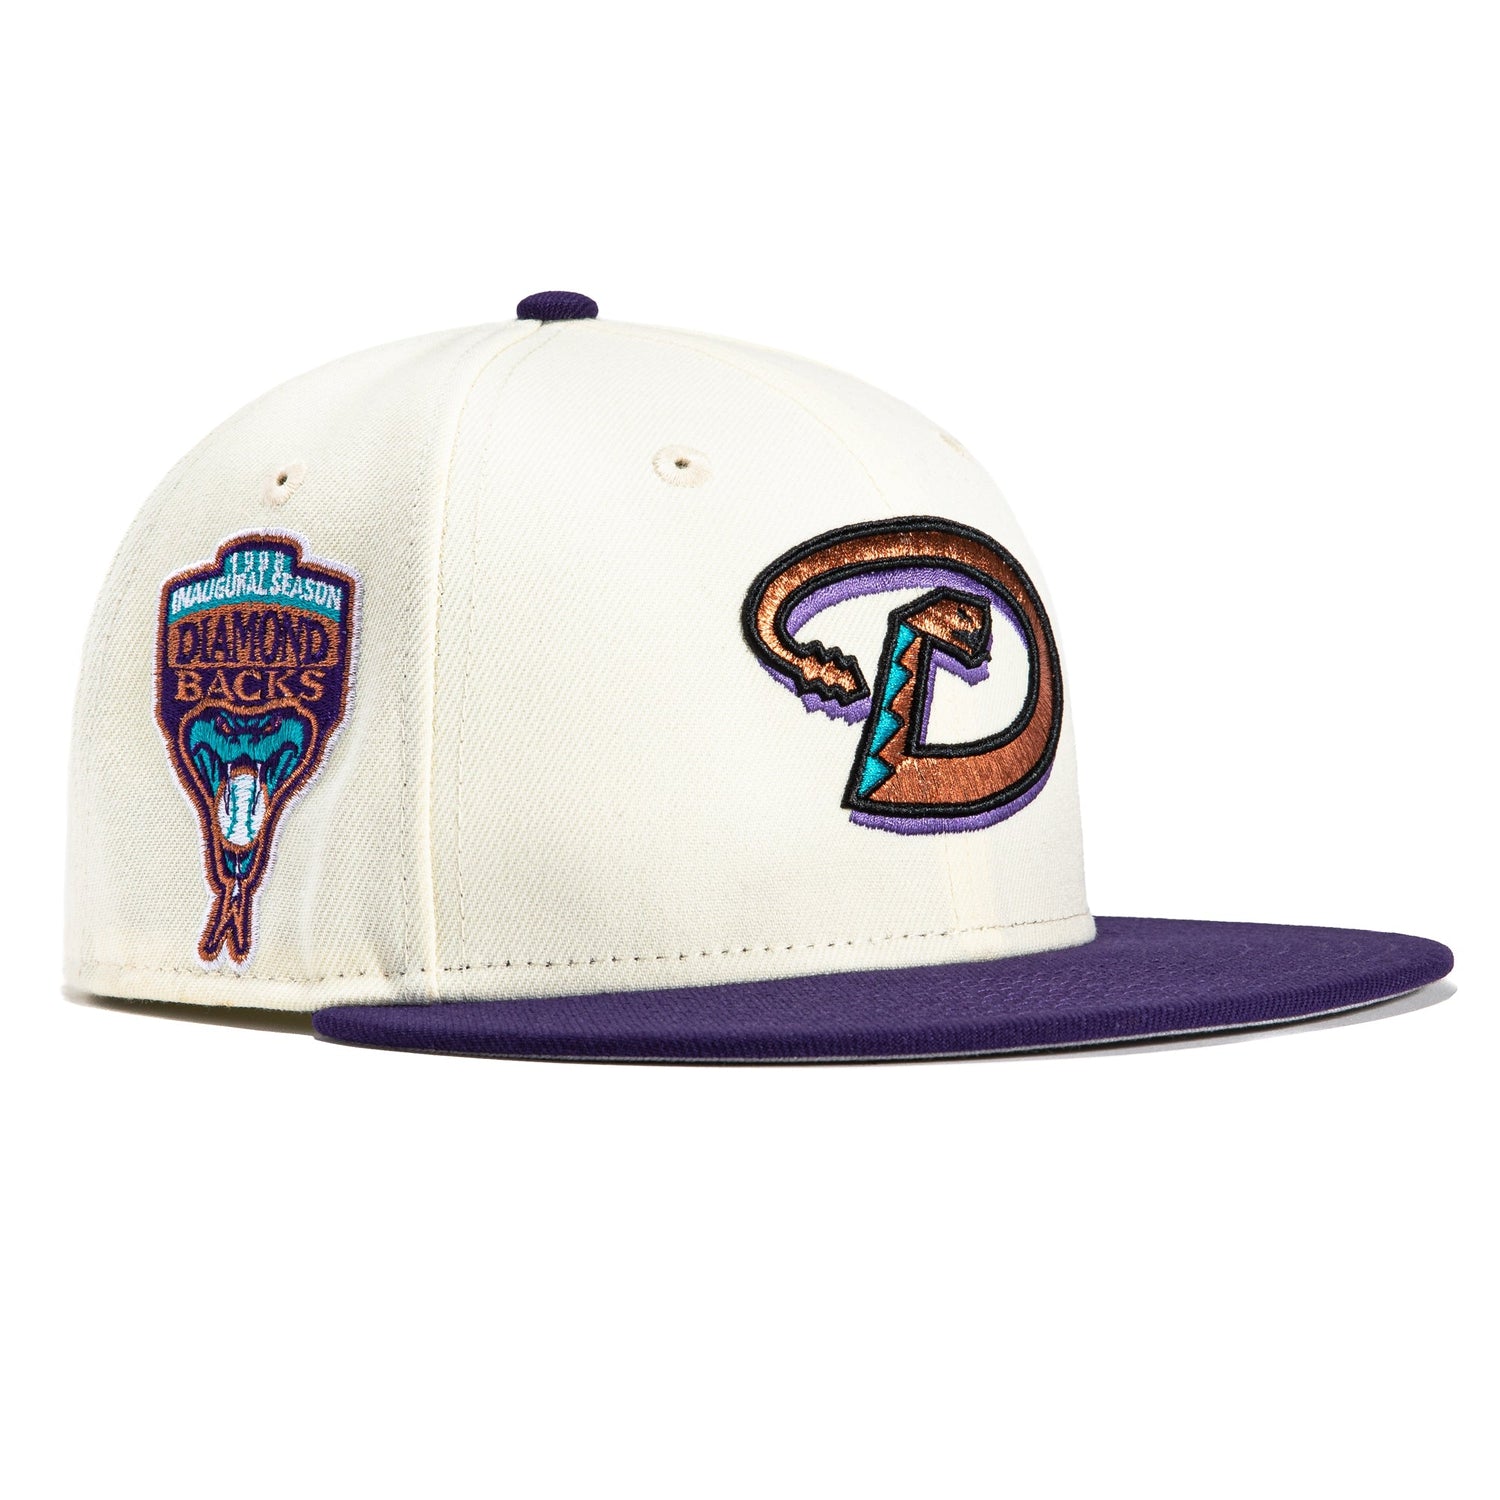 New Era 59FIFTY Arizona Diamondbacks Inaugural Patch D Hat - White, Purple White/Purple / 7 1/2